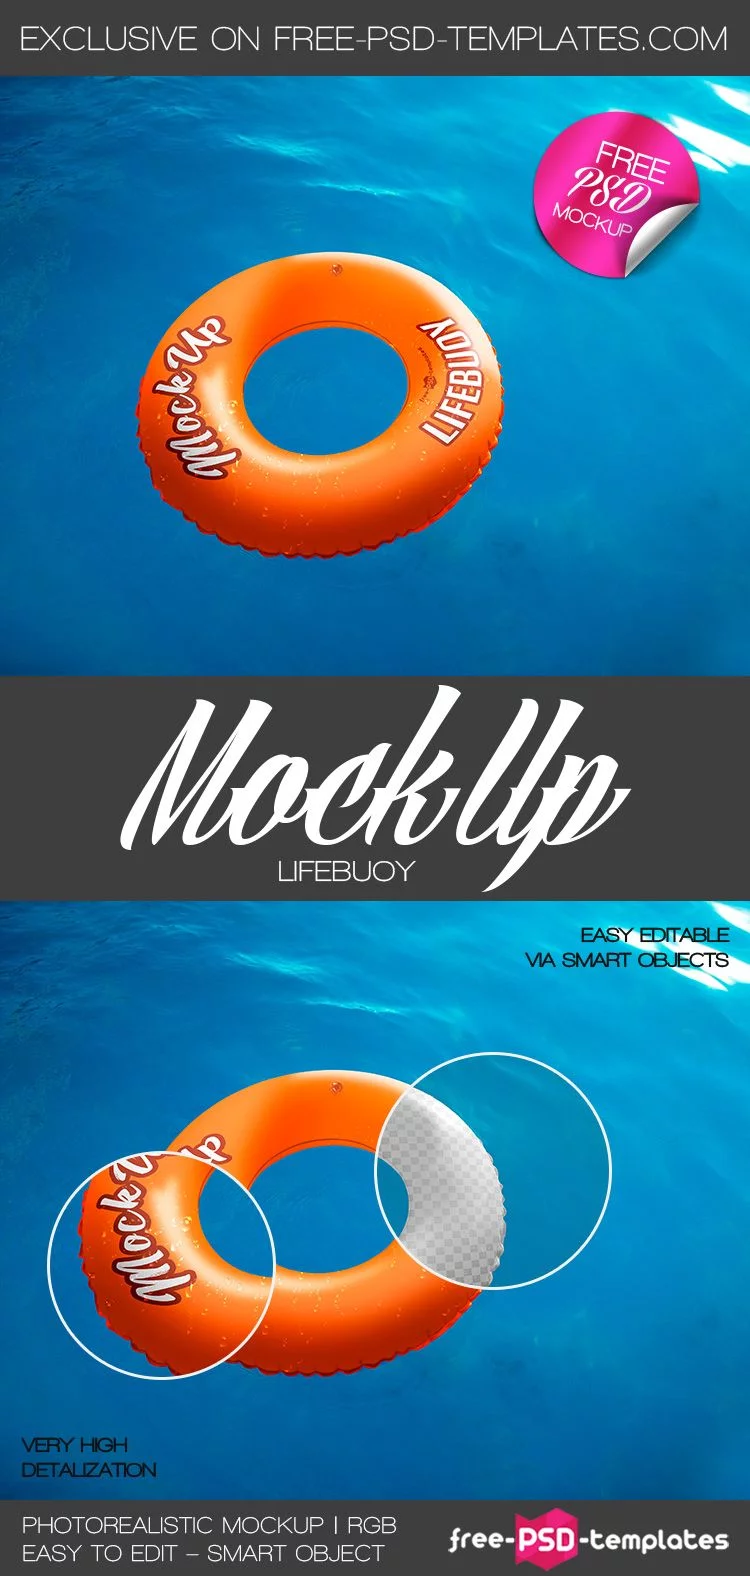 Free Lifebuoy Mock-up in PSD